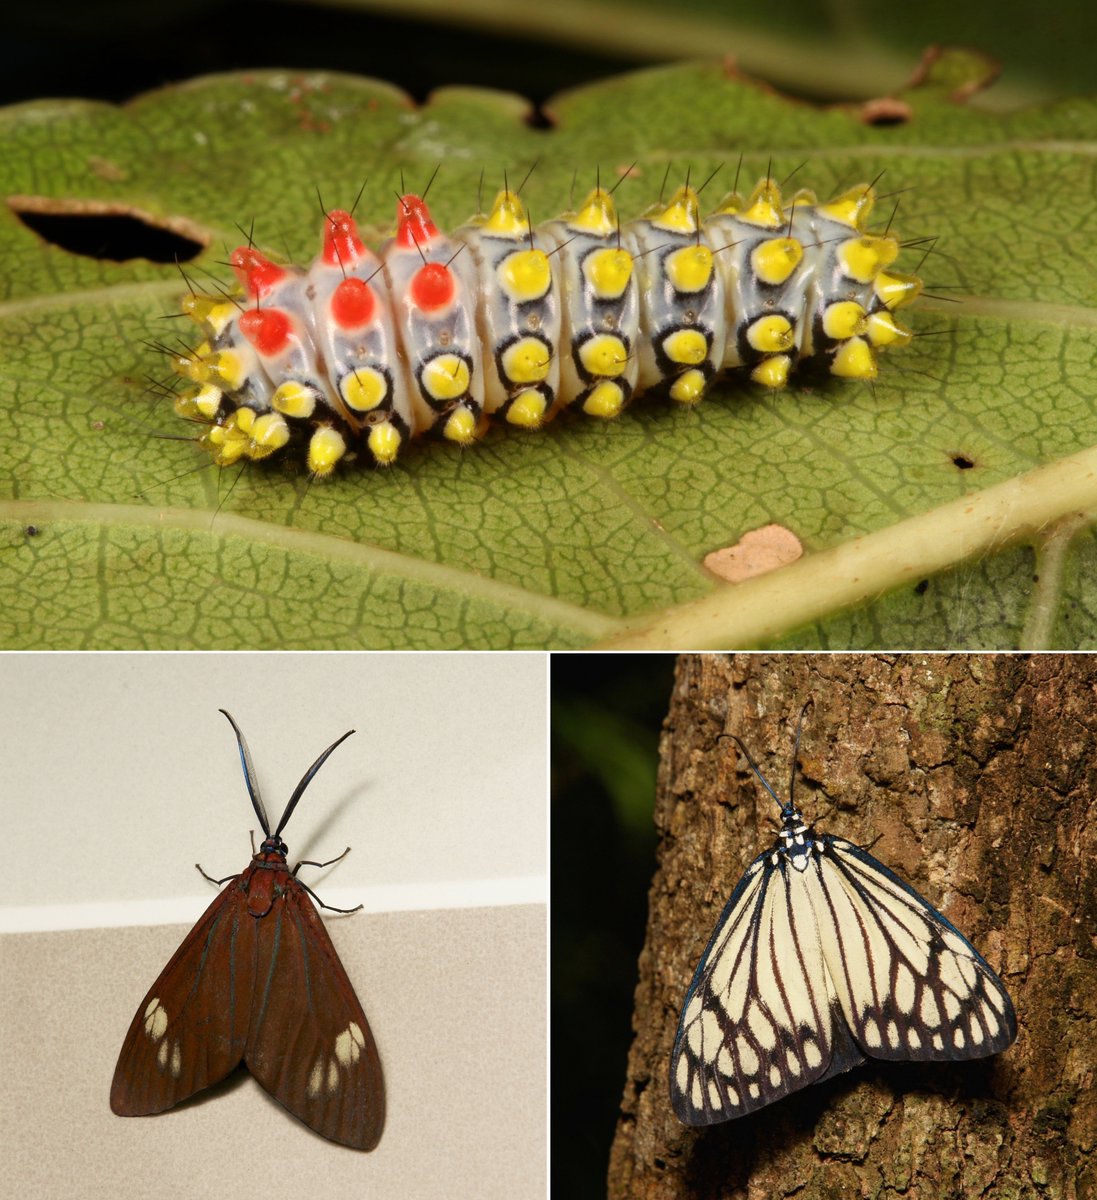 METAMORPHOSIS - Drury's Jewel or Black-veined Burnet  #Moth (Cyclosia papilionaris, Chalcosiinae, Zygaenidae)(male moth on the left, female on the right) https://flic.kr/p/SvWCfS  #insect  #China  #Yunnan  #Lepidoptera  #entomology